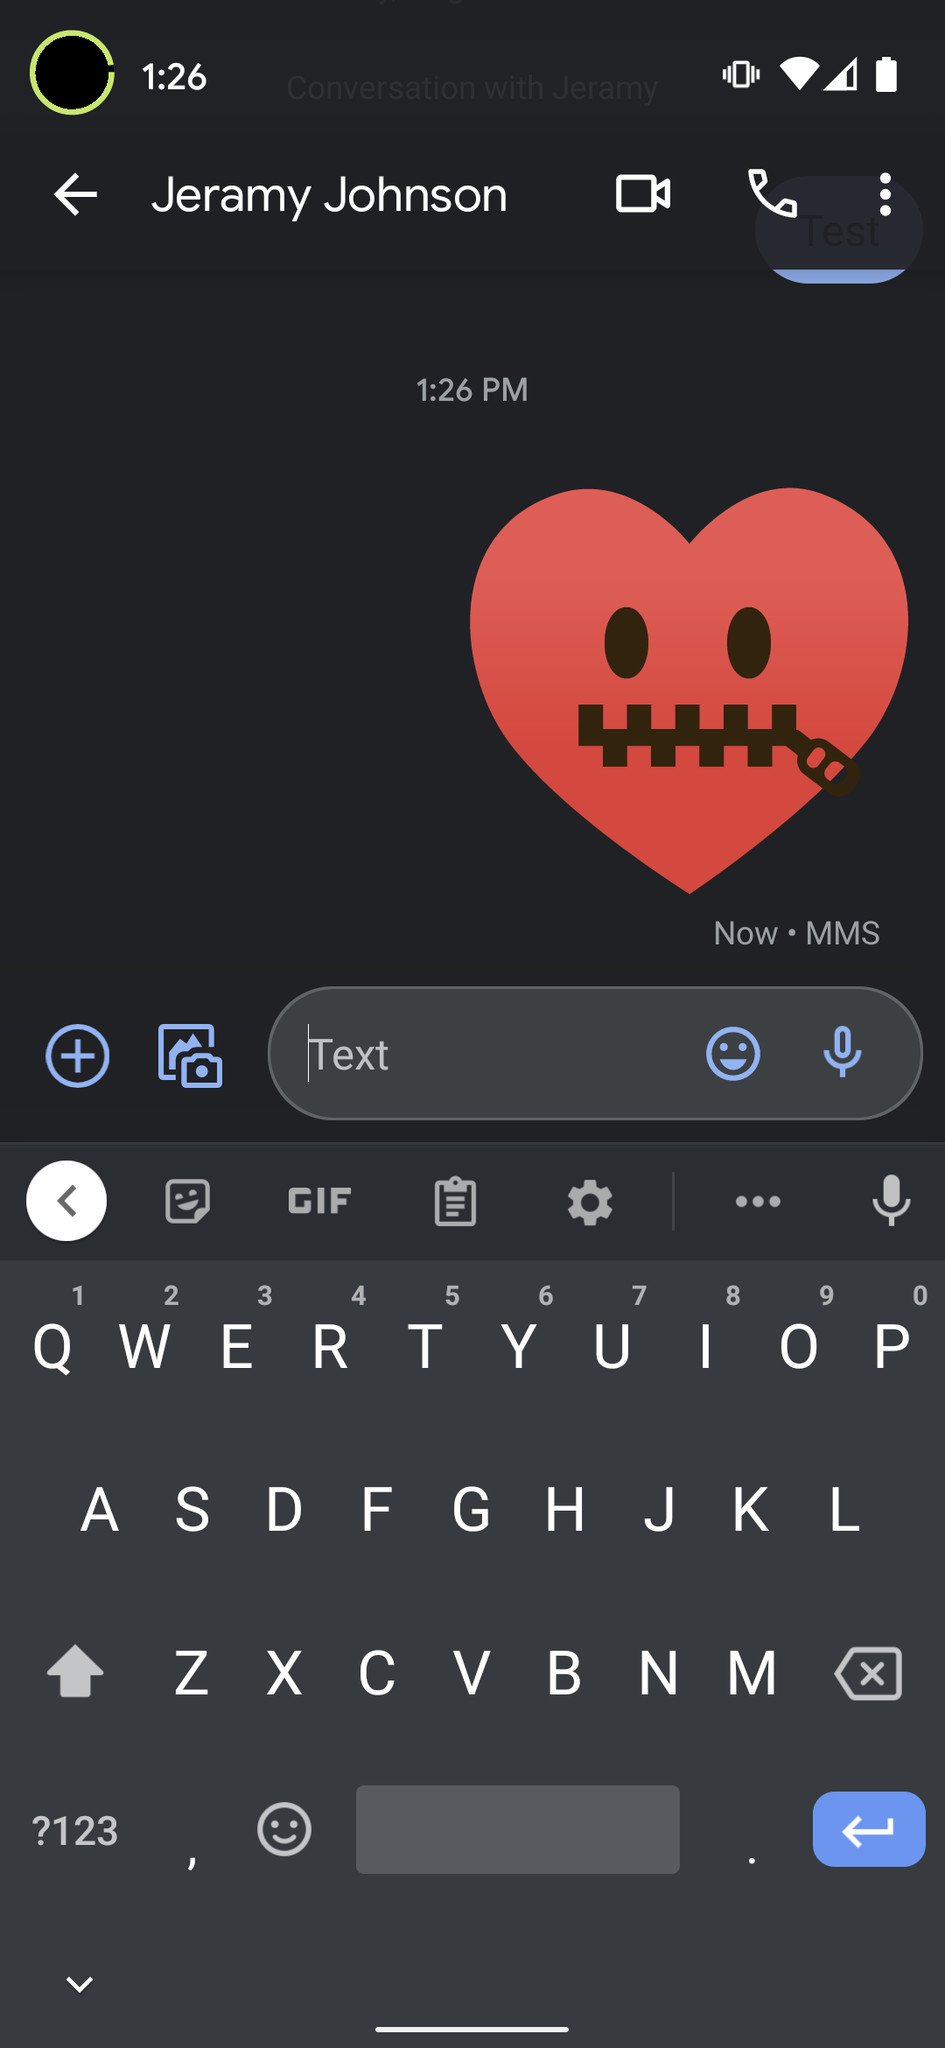 Etapa 5 do mashup de emoji do Gboard